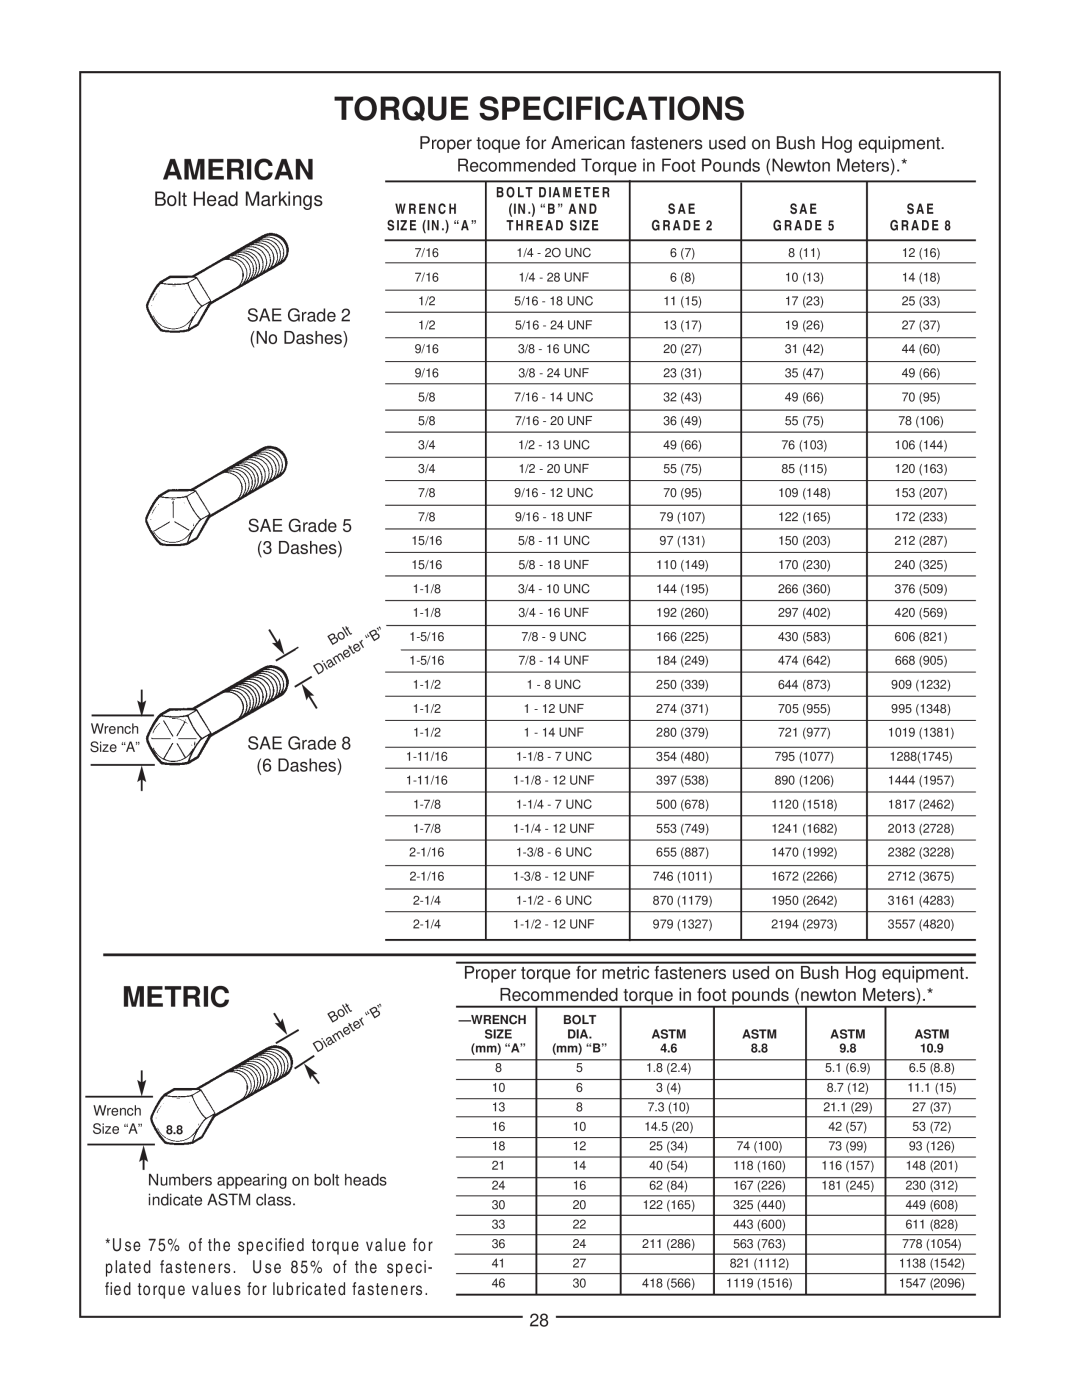 Bush Hog 2347 QT Torque Specifications, American, Metric, Bolt Head Markings, Wrench Size “A”, Astm, mm “A”, mm “B”, 10.9 